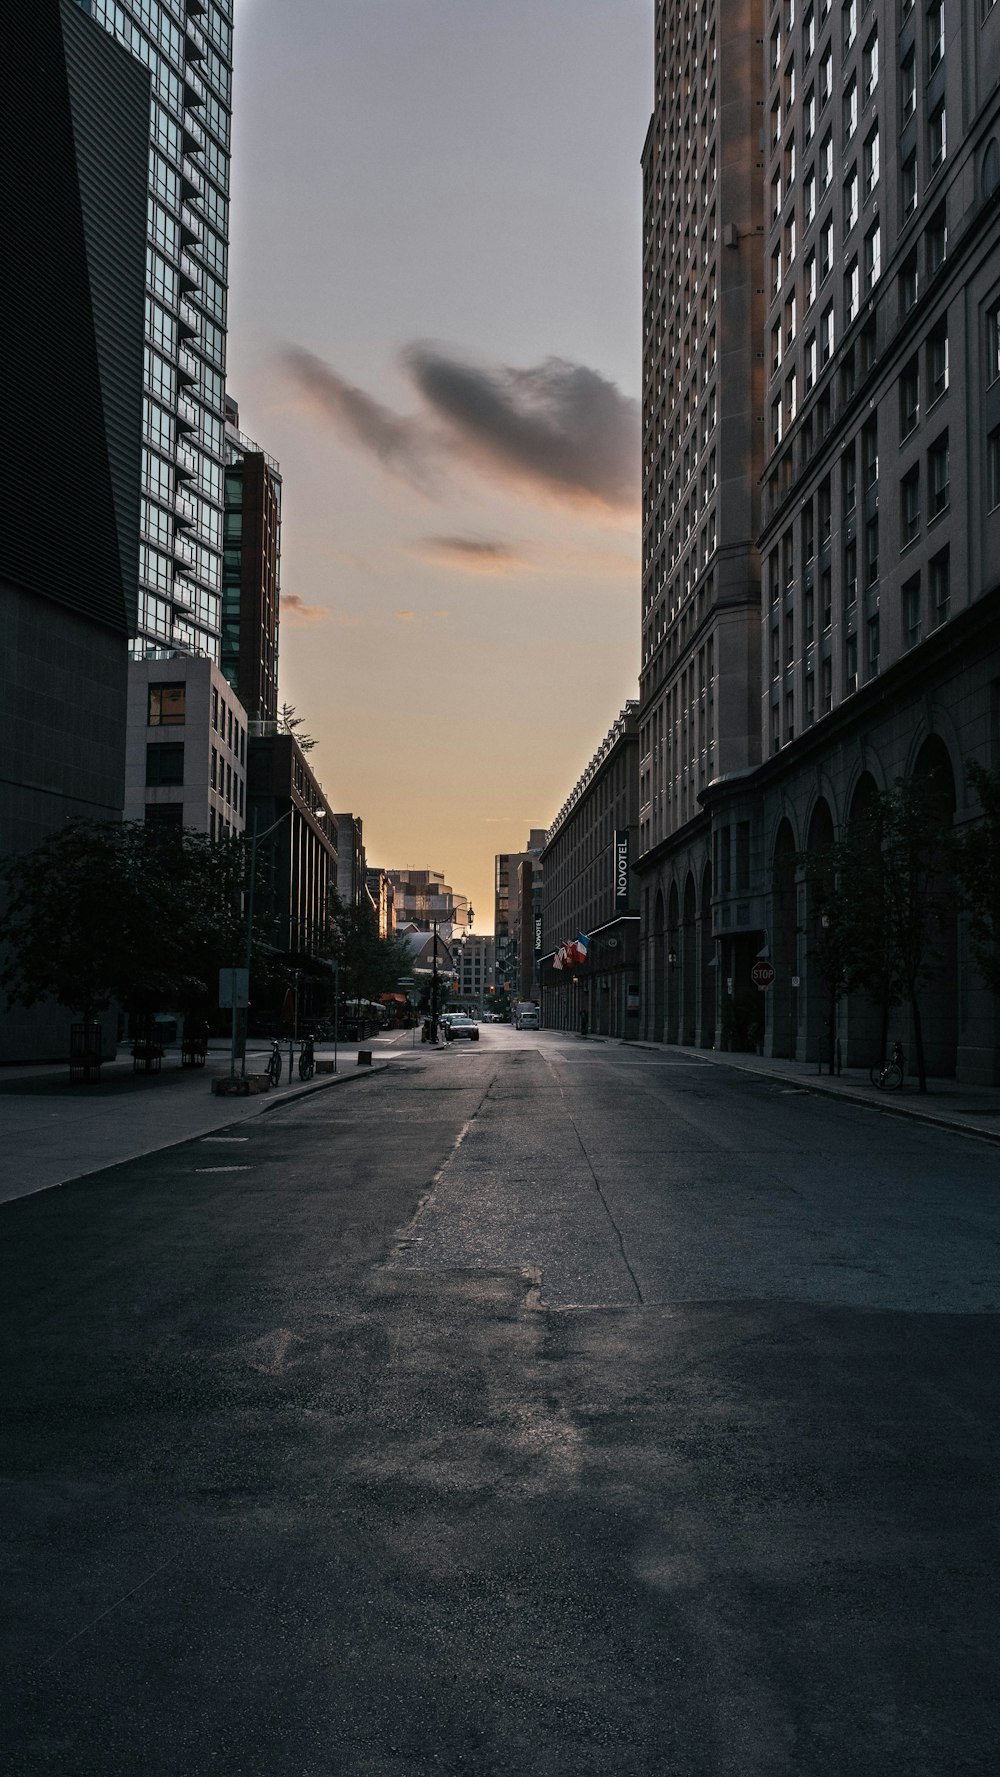 empty street in between high-rise buildings